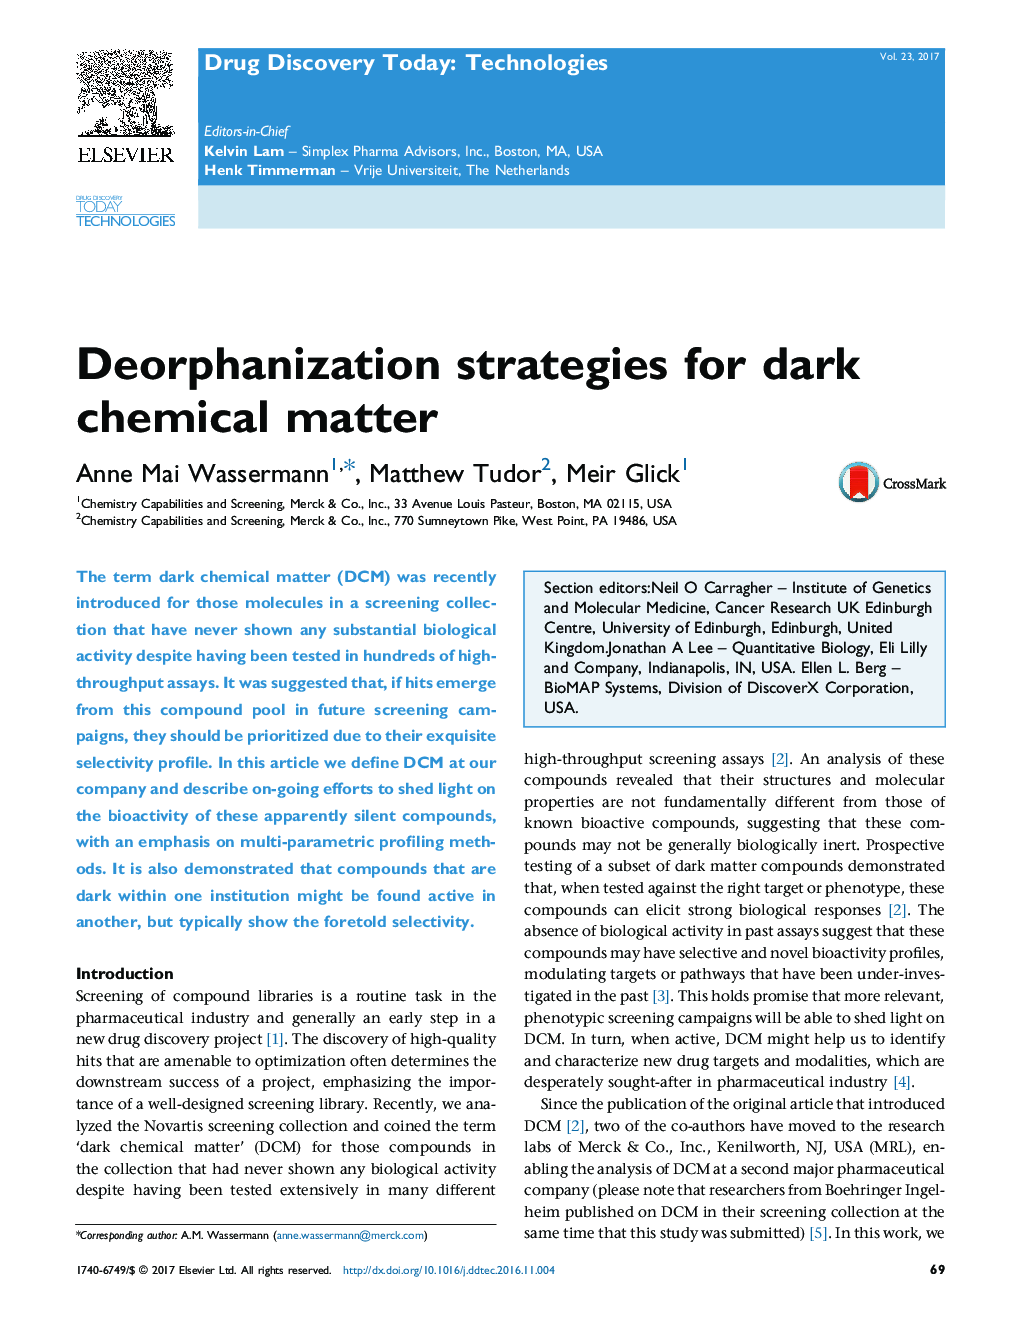 Deorphanization strategies for dark chemical matter